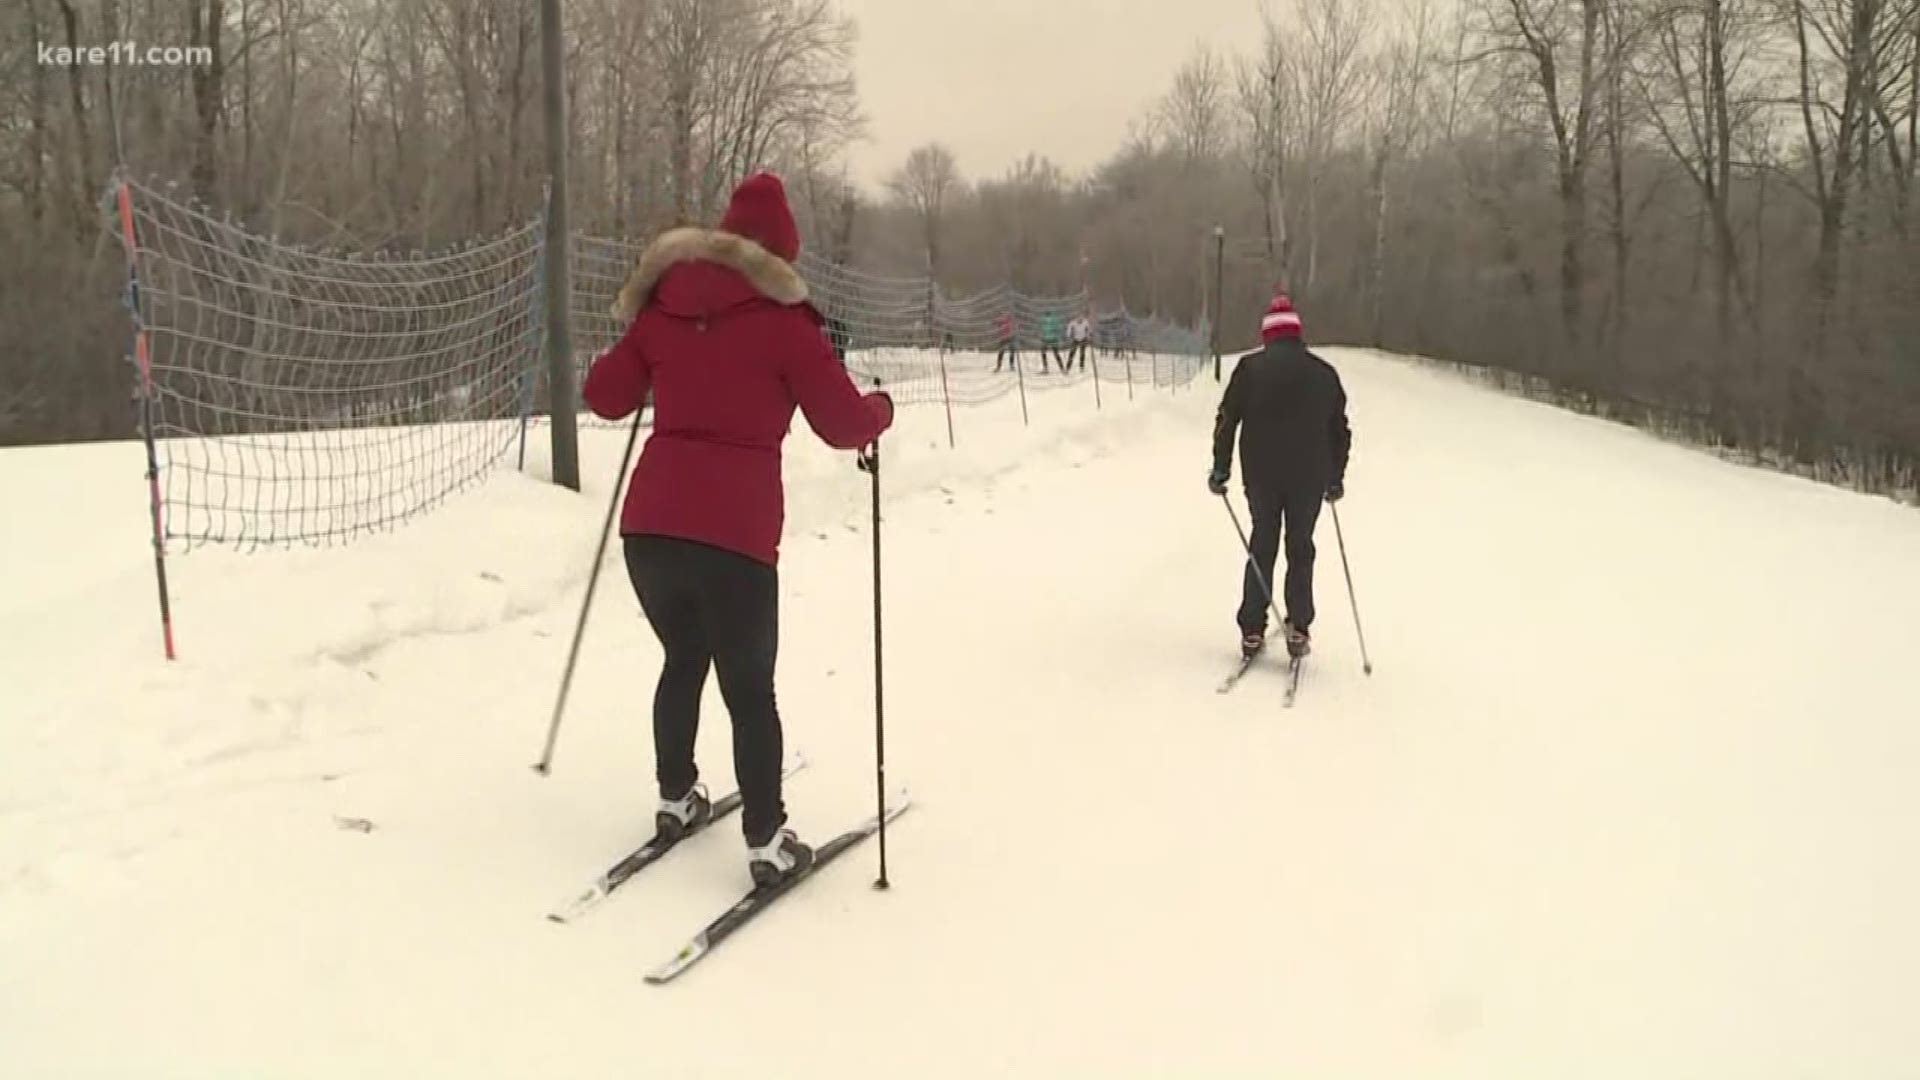 KARE 11's Sharon Yoo gave skiing a try during The Minnesota Nordic Ski Opener held at Elm Creek Park Reserve.